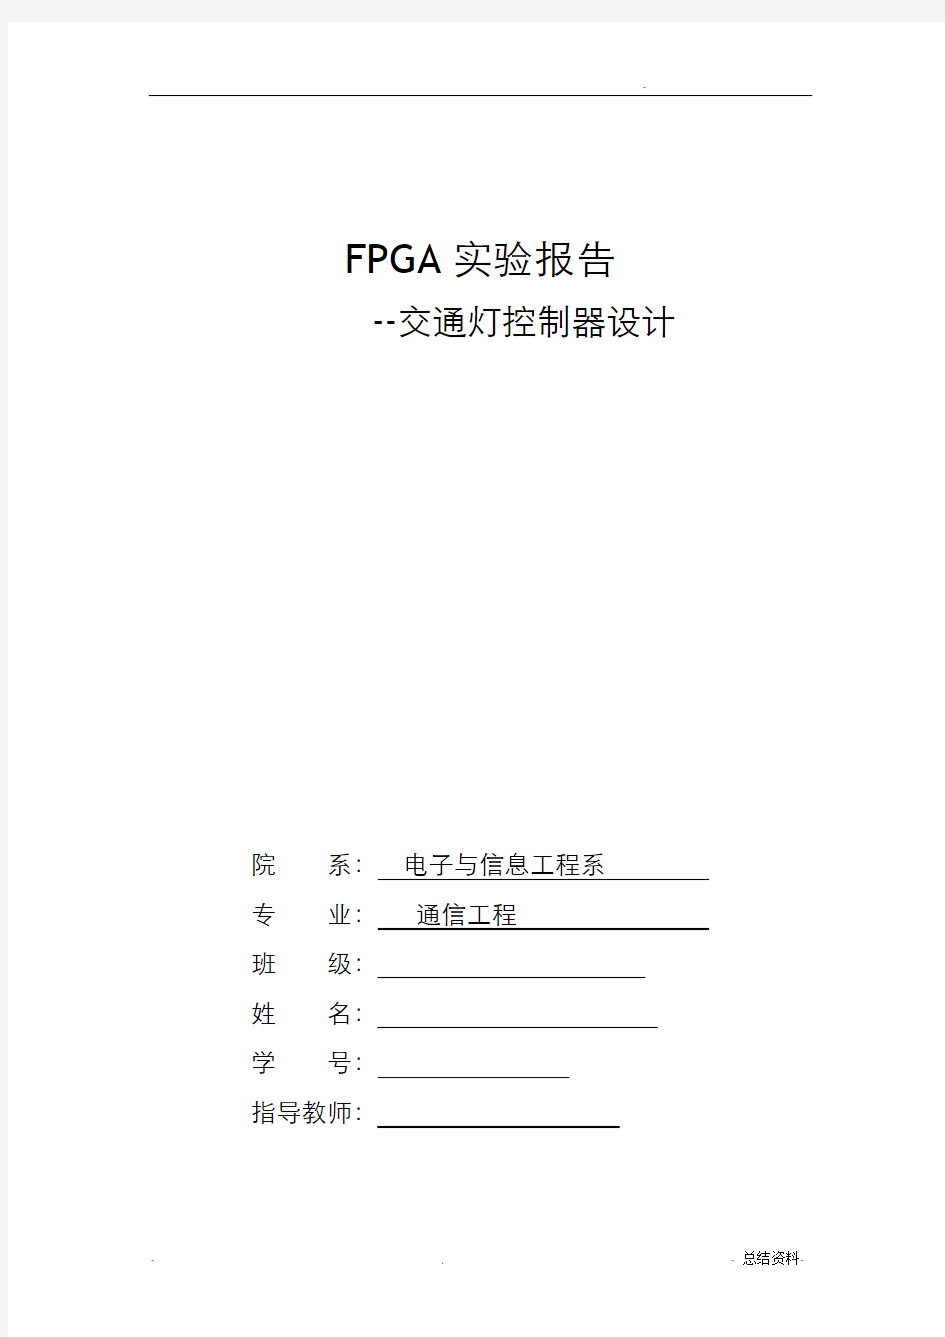 FPGA实验报告-交通灯控制器设计